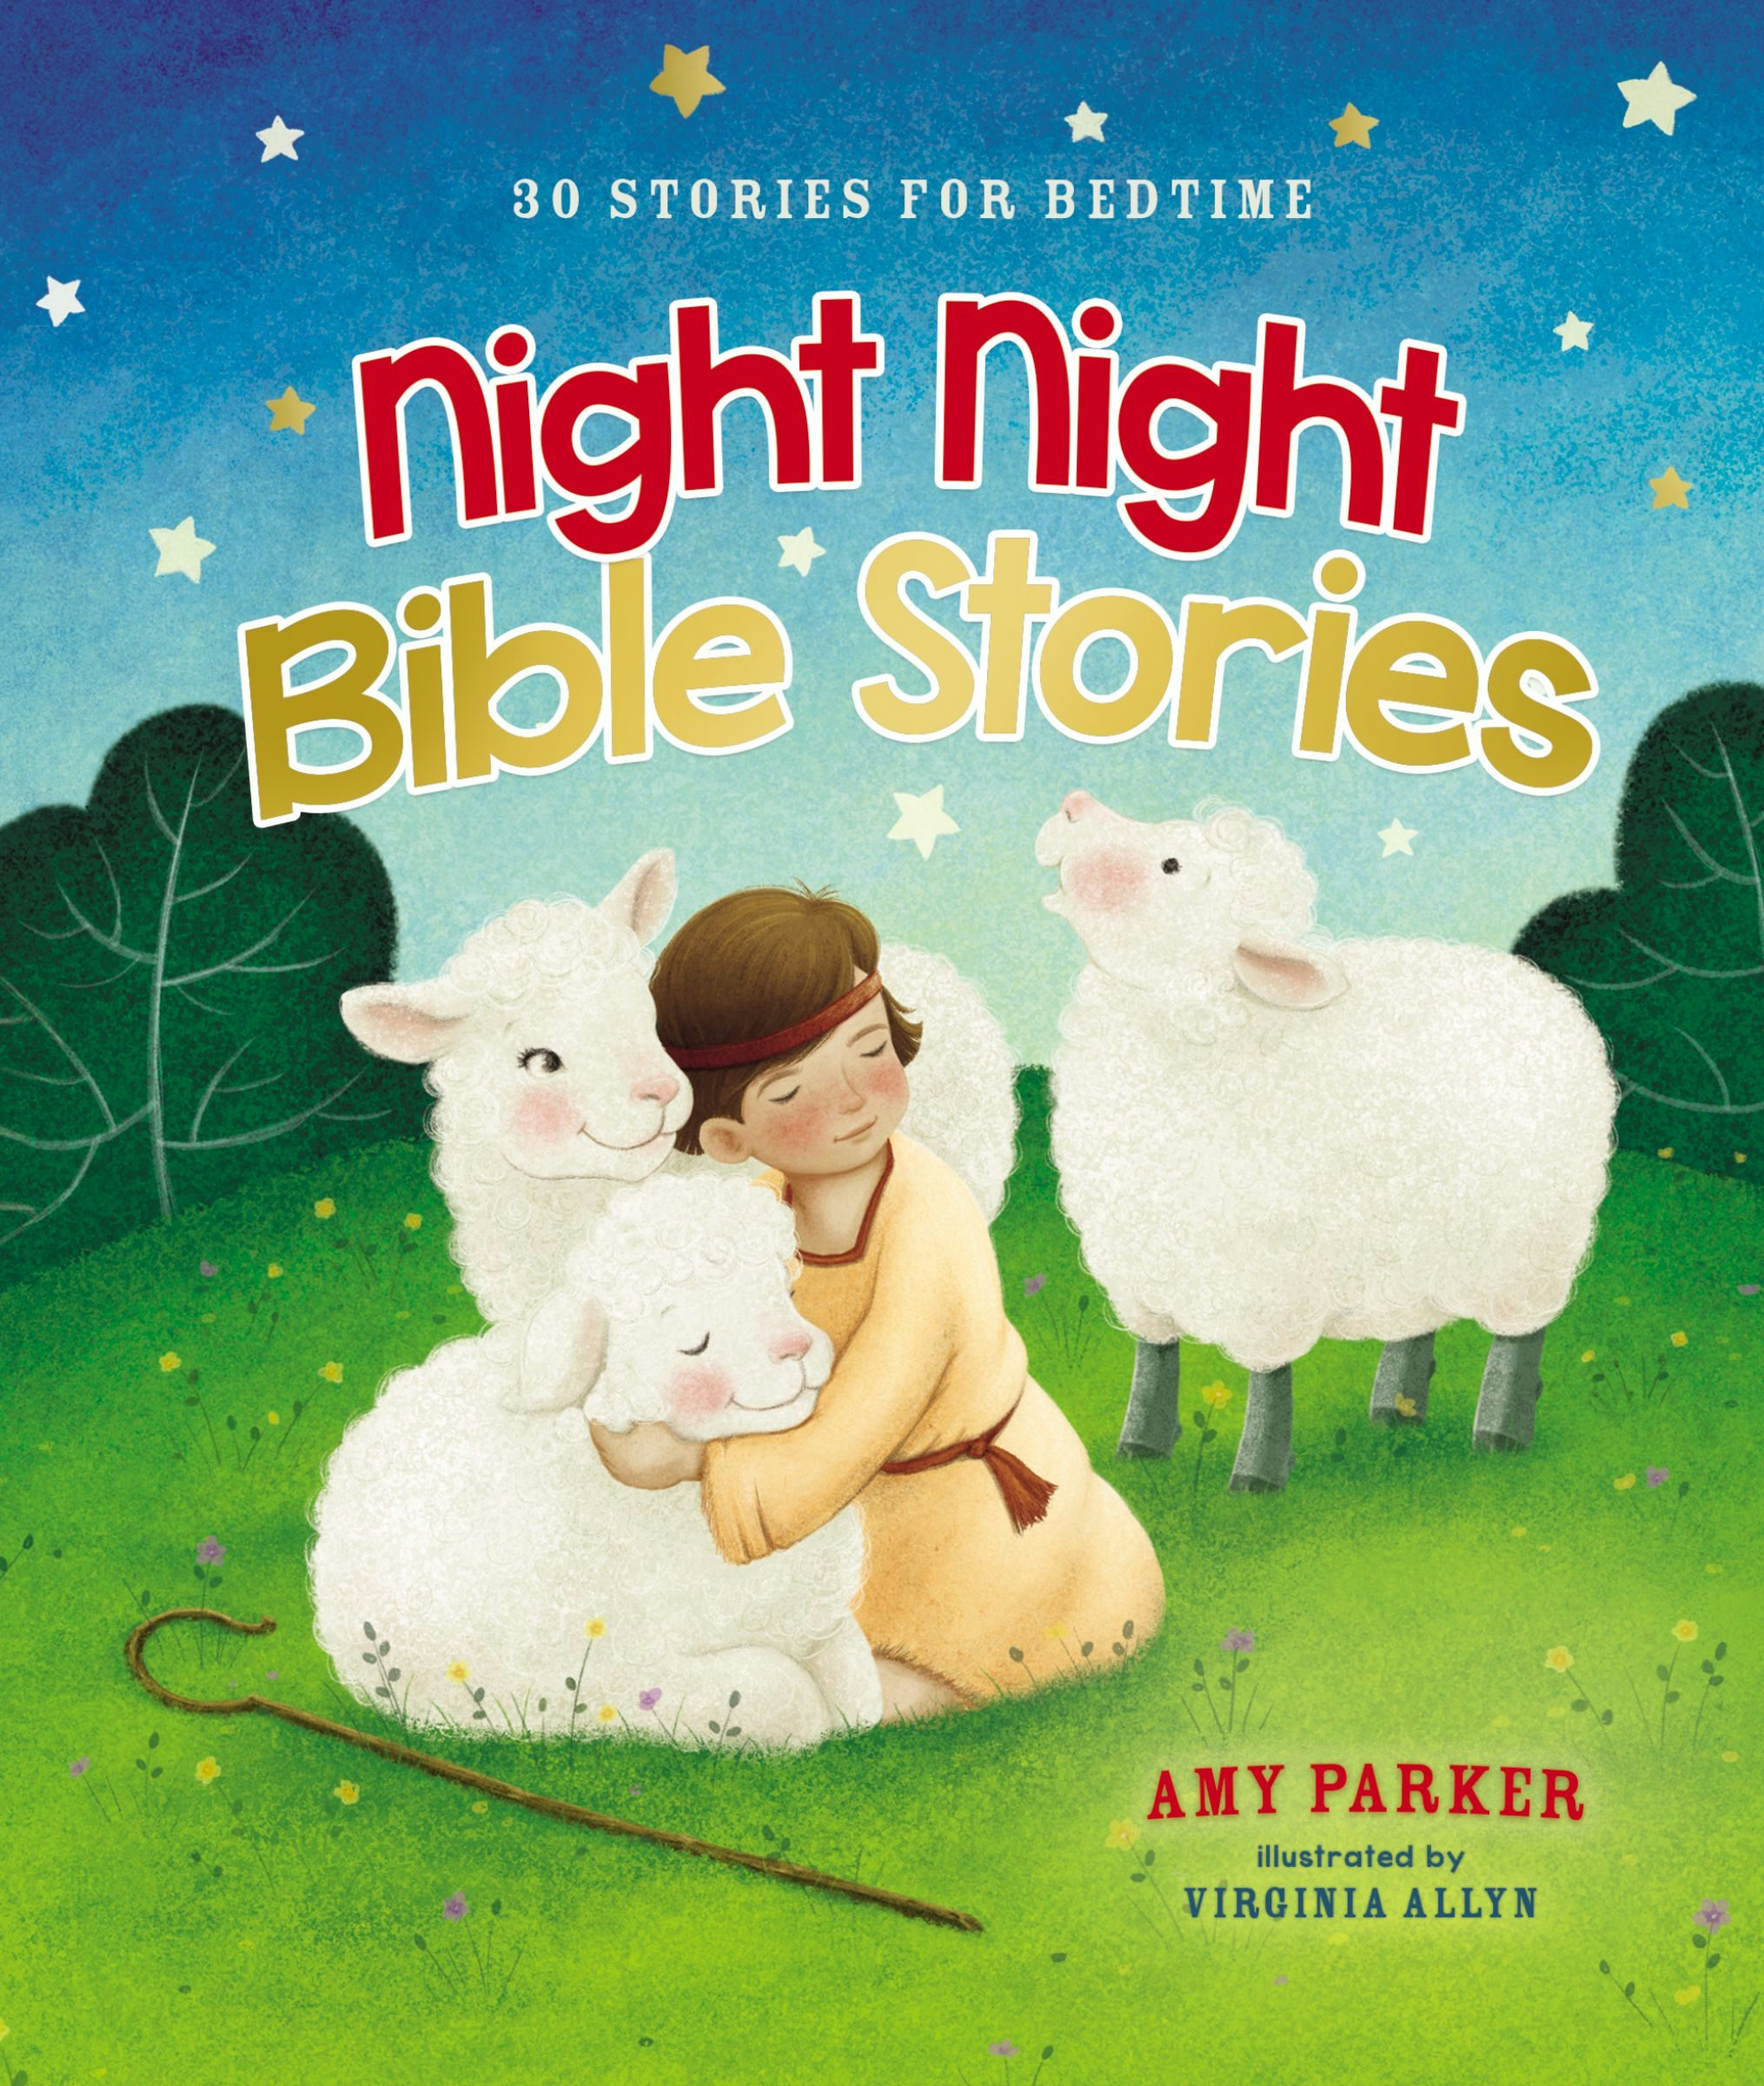 Эми Паркер. The story 30. The Baby Duck stories by Amy hest. Аудиокниги для детей на ночь